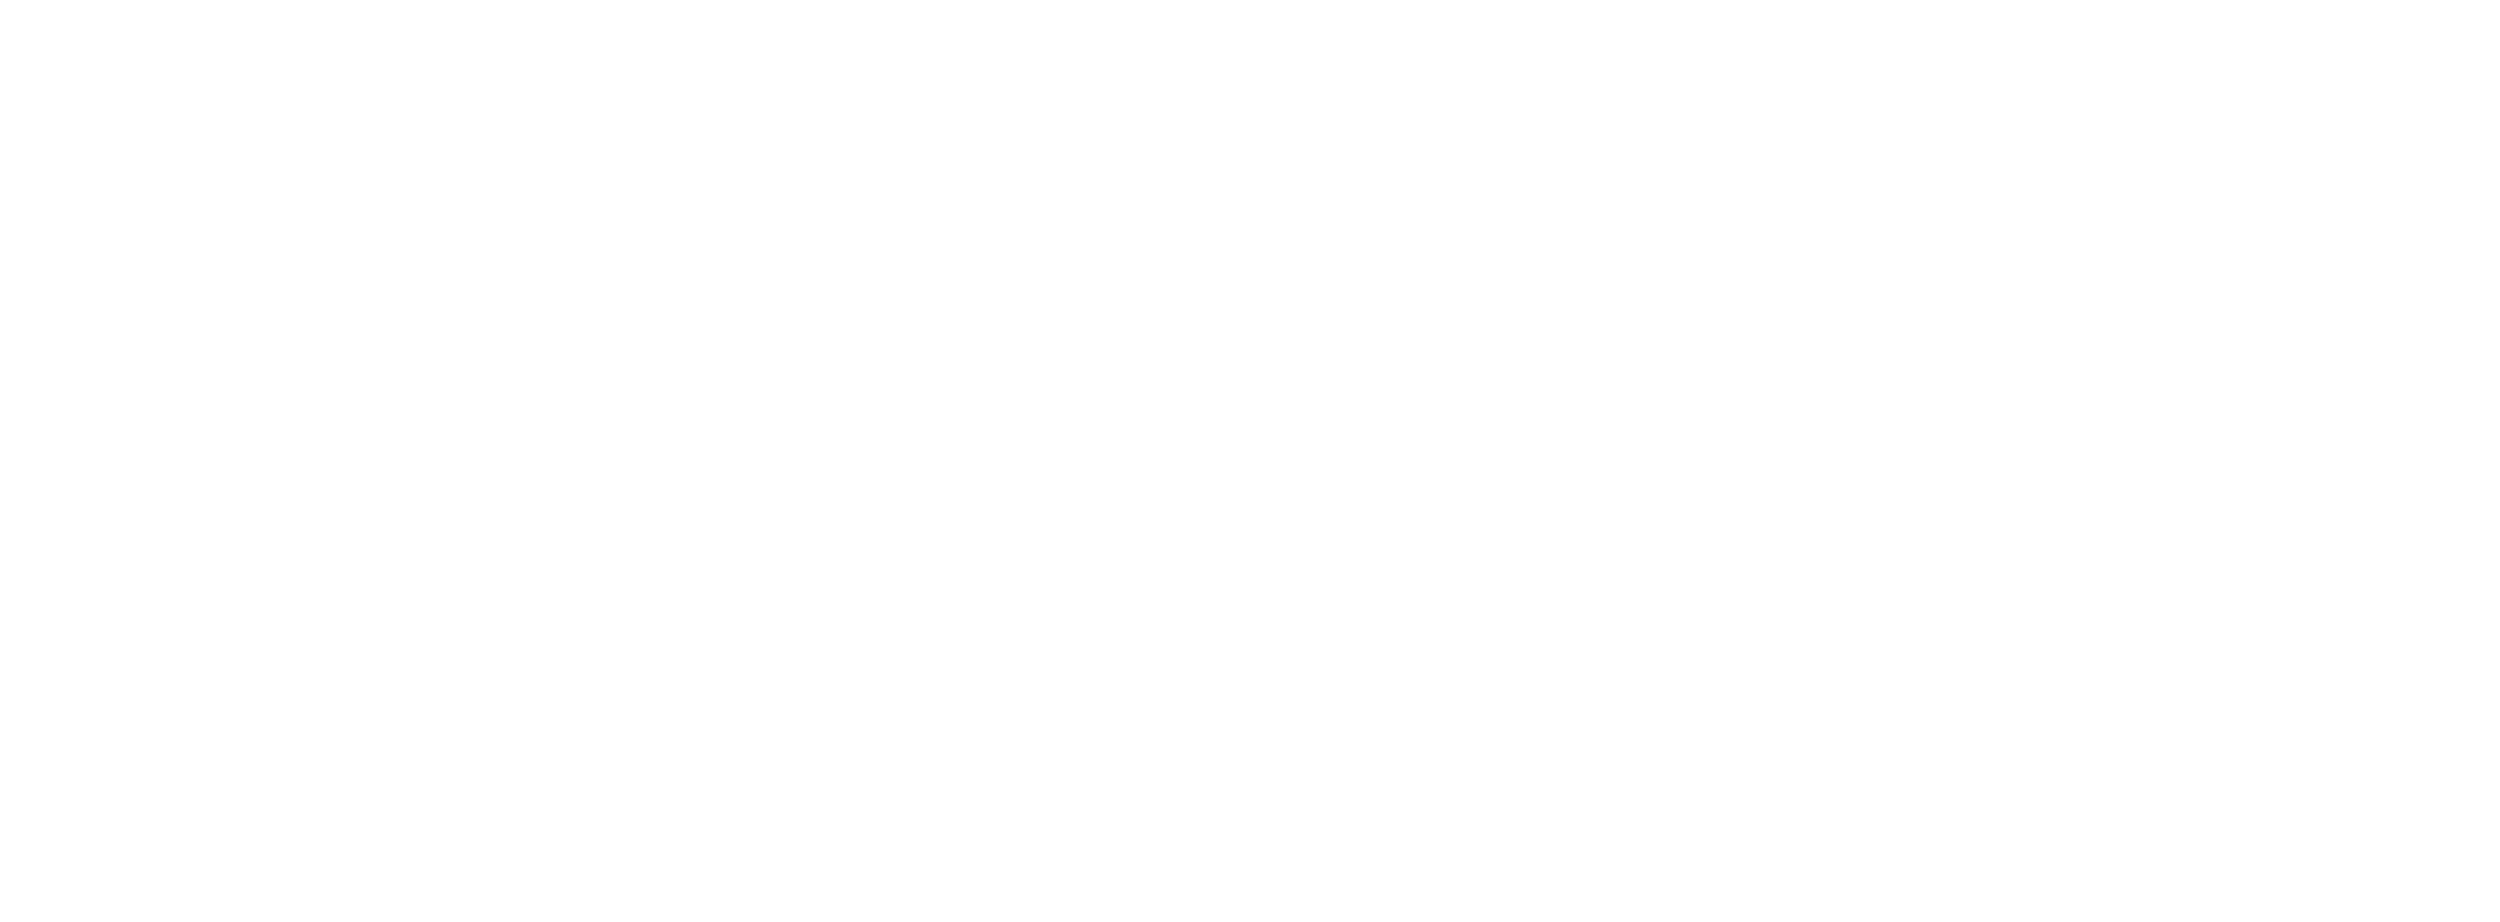 TriMotion Media - Central Coast Video | Photo | Drone